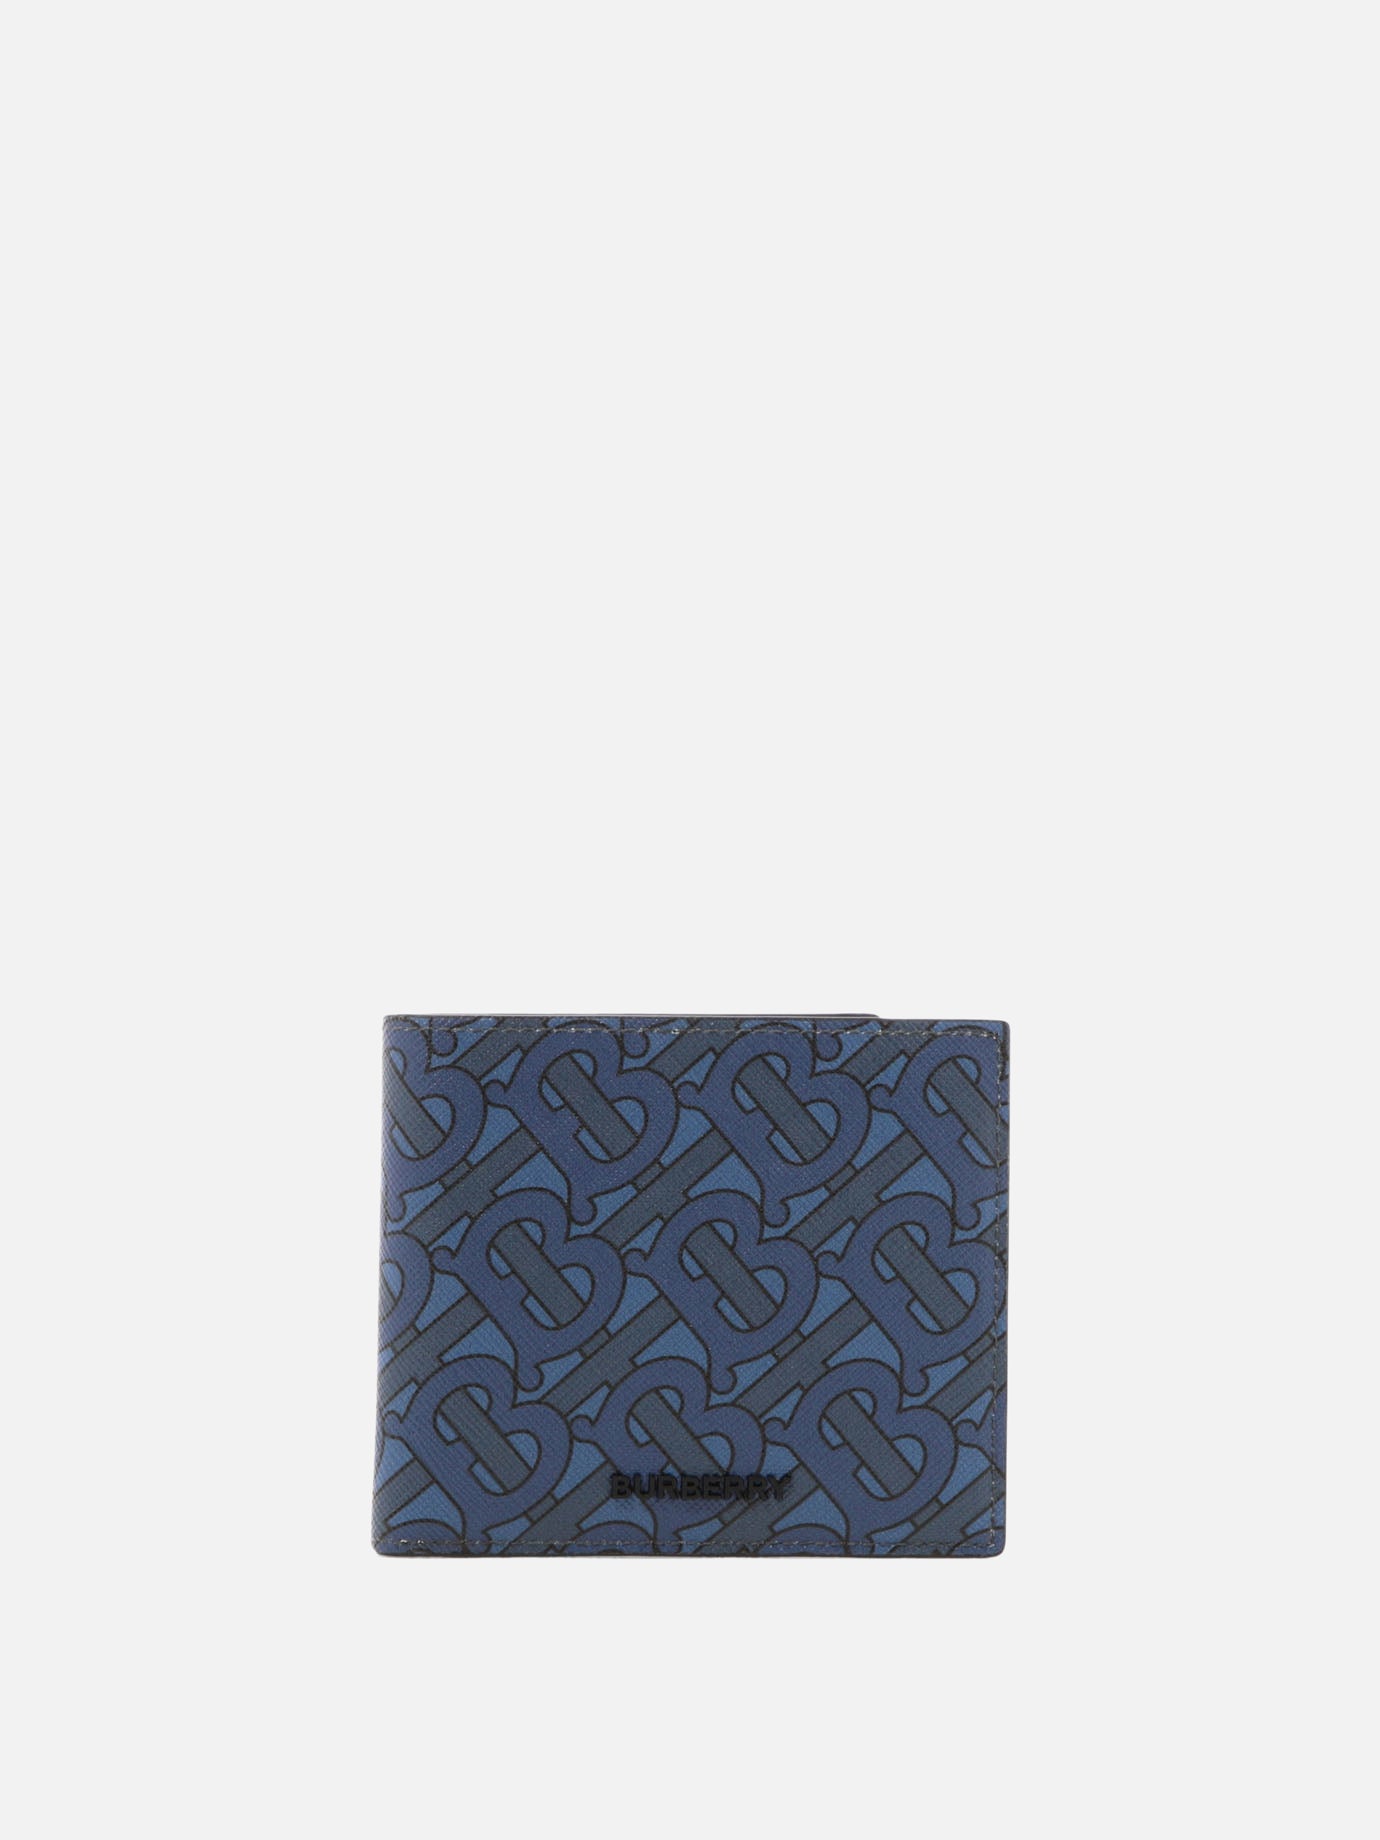 "Monogram" wallet